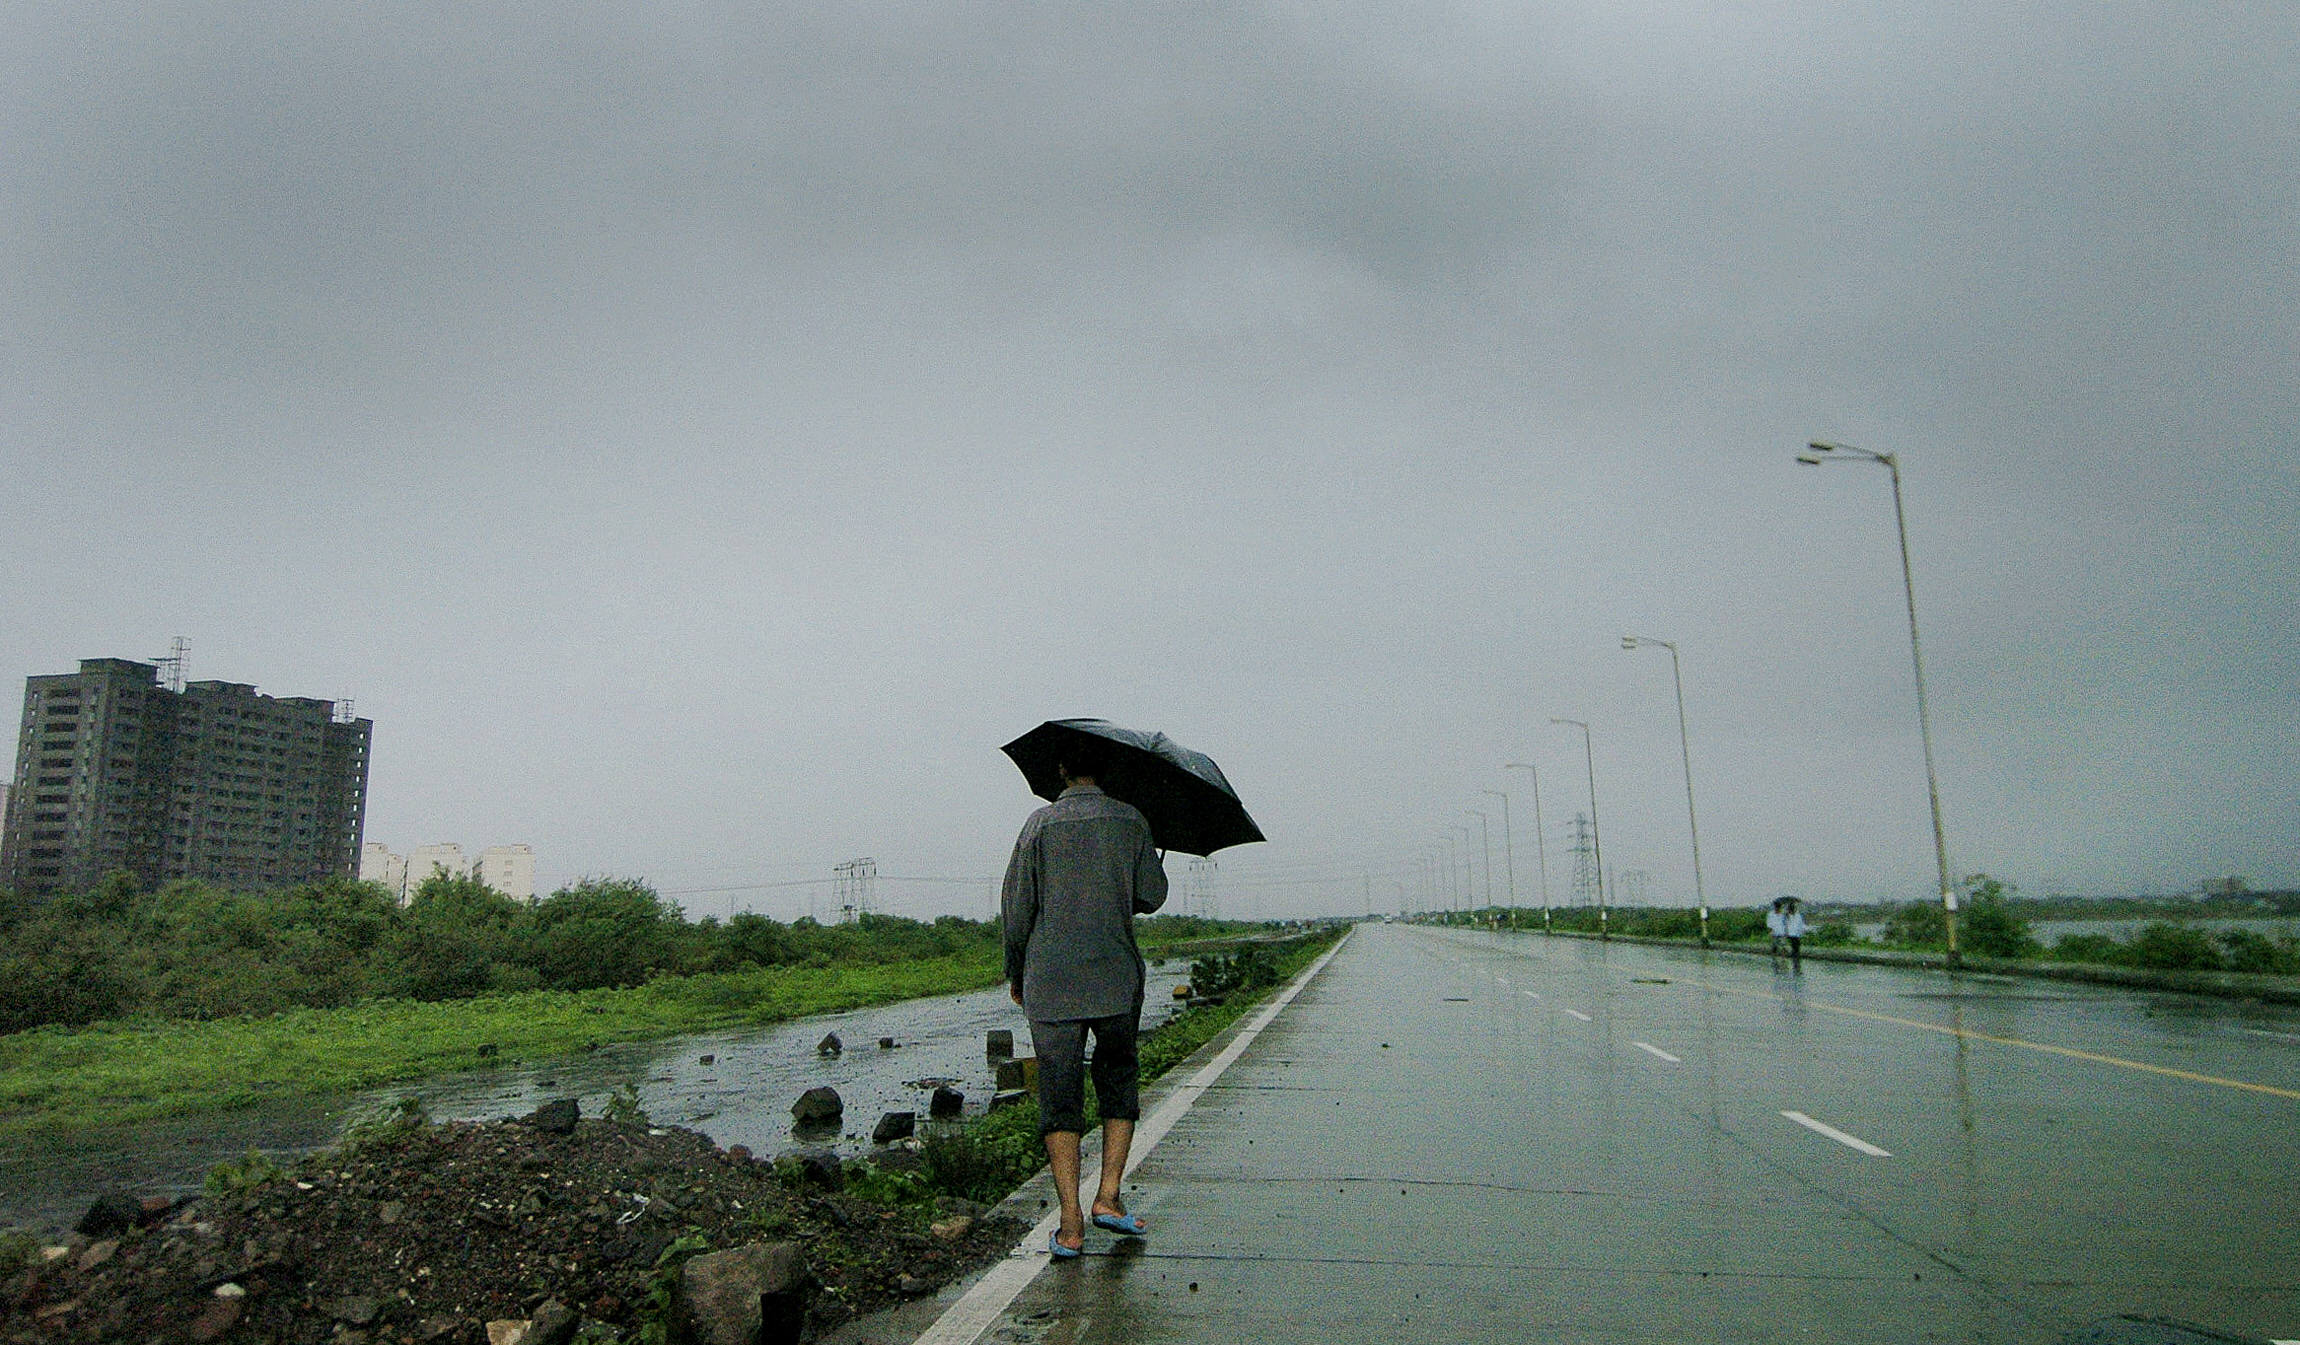 A Mumbai resident makes his way home along the deserted Wadala highway